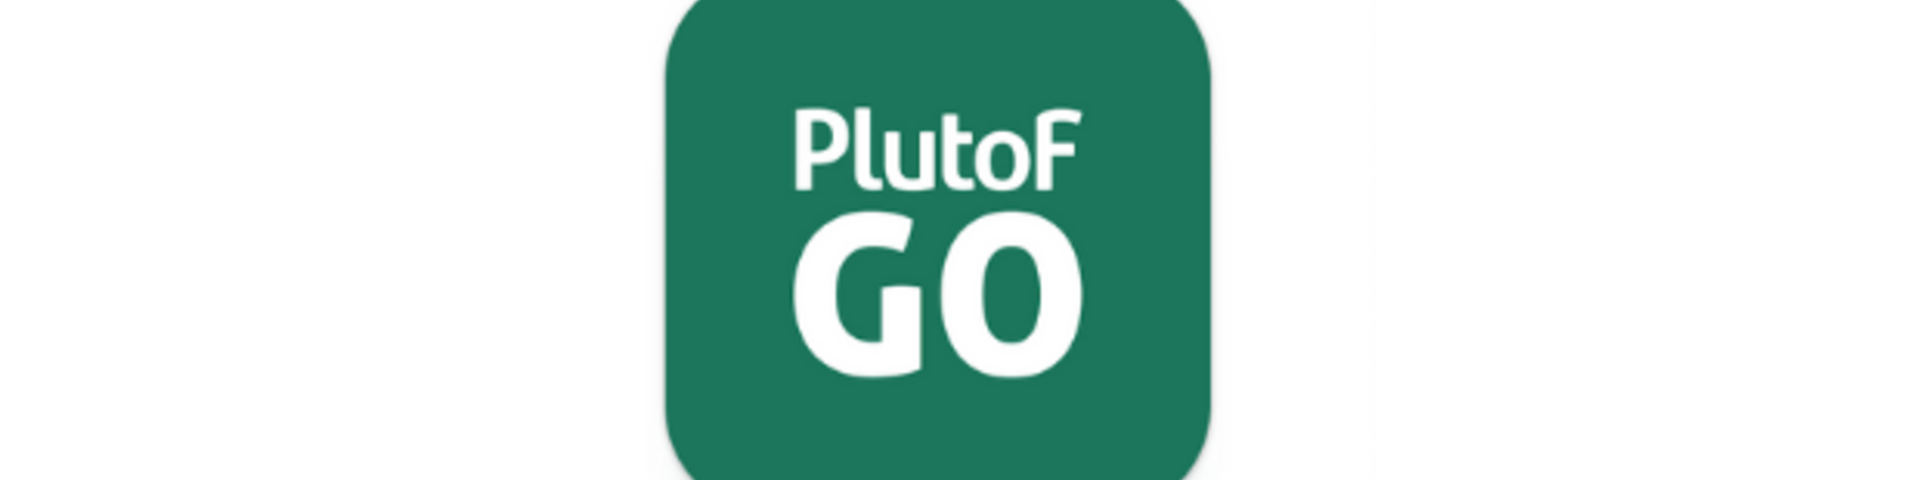 Plutof Go logo lmba